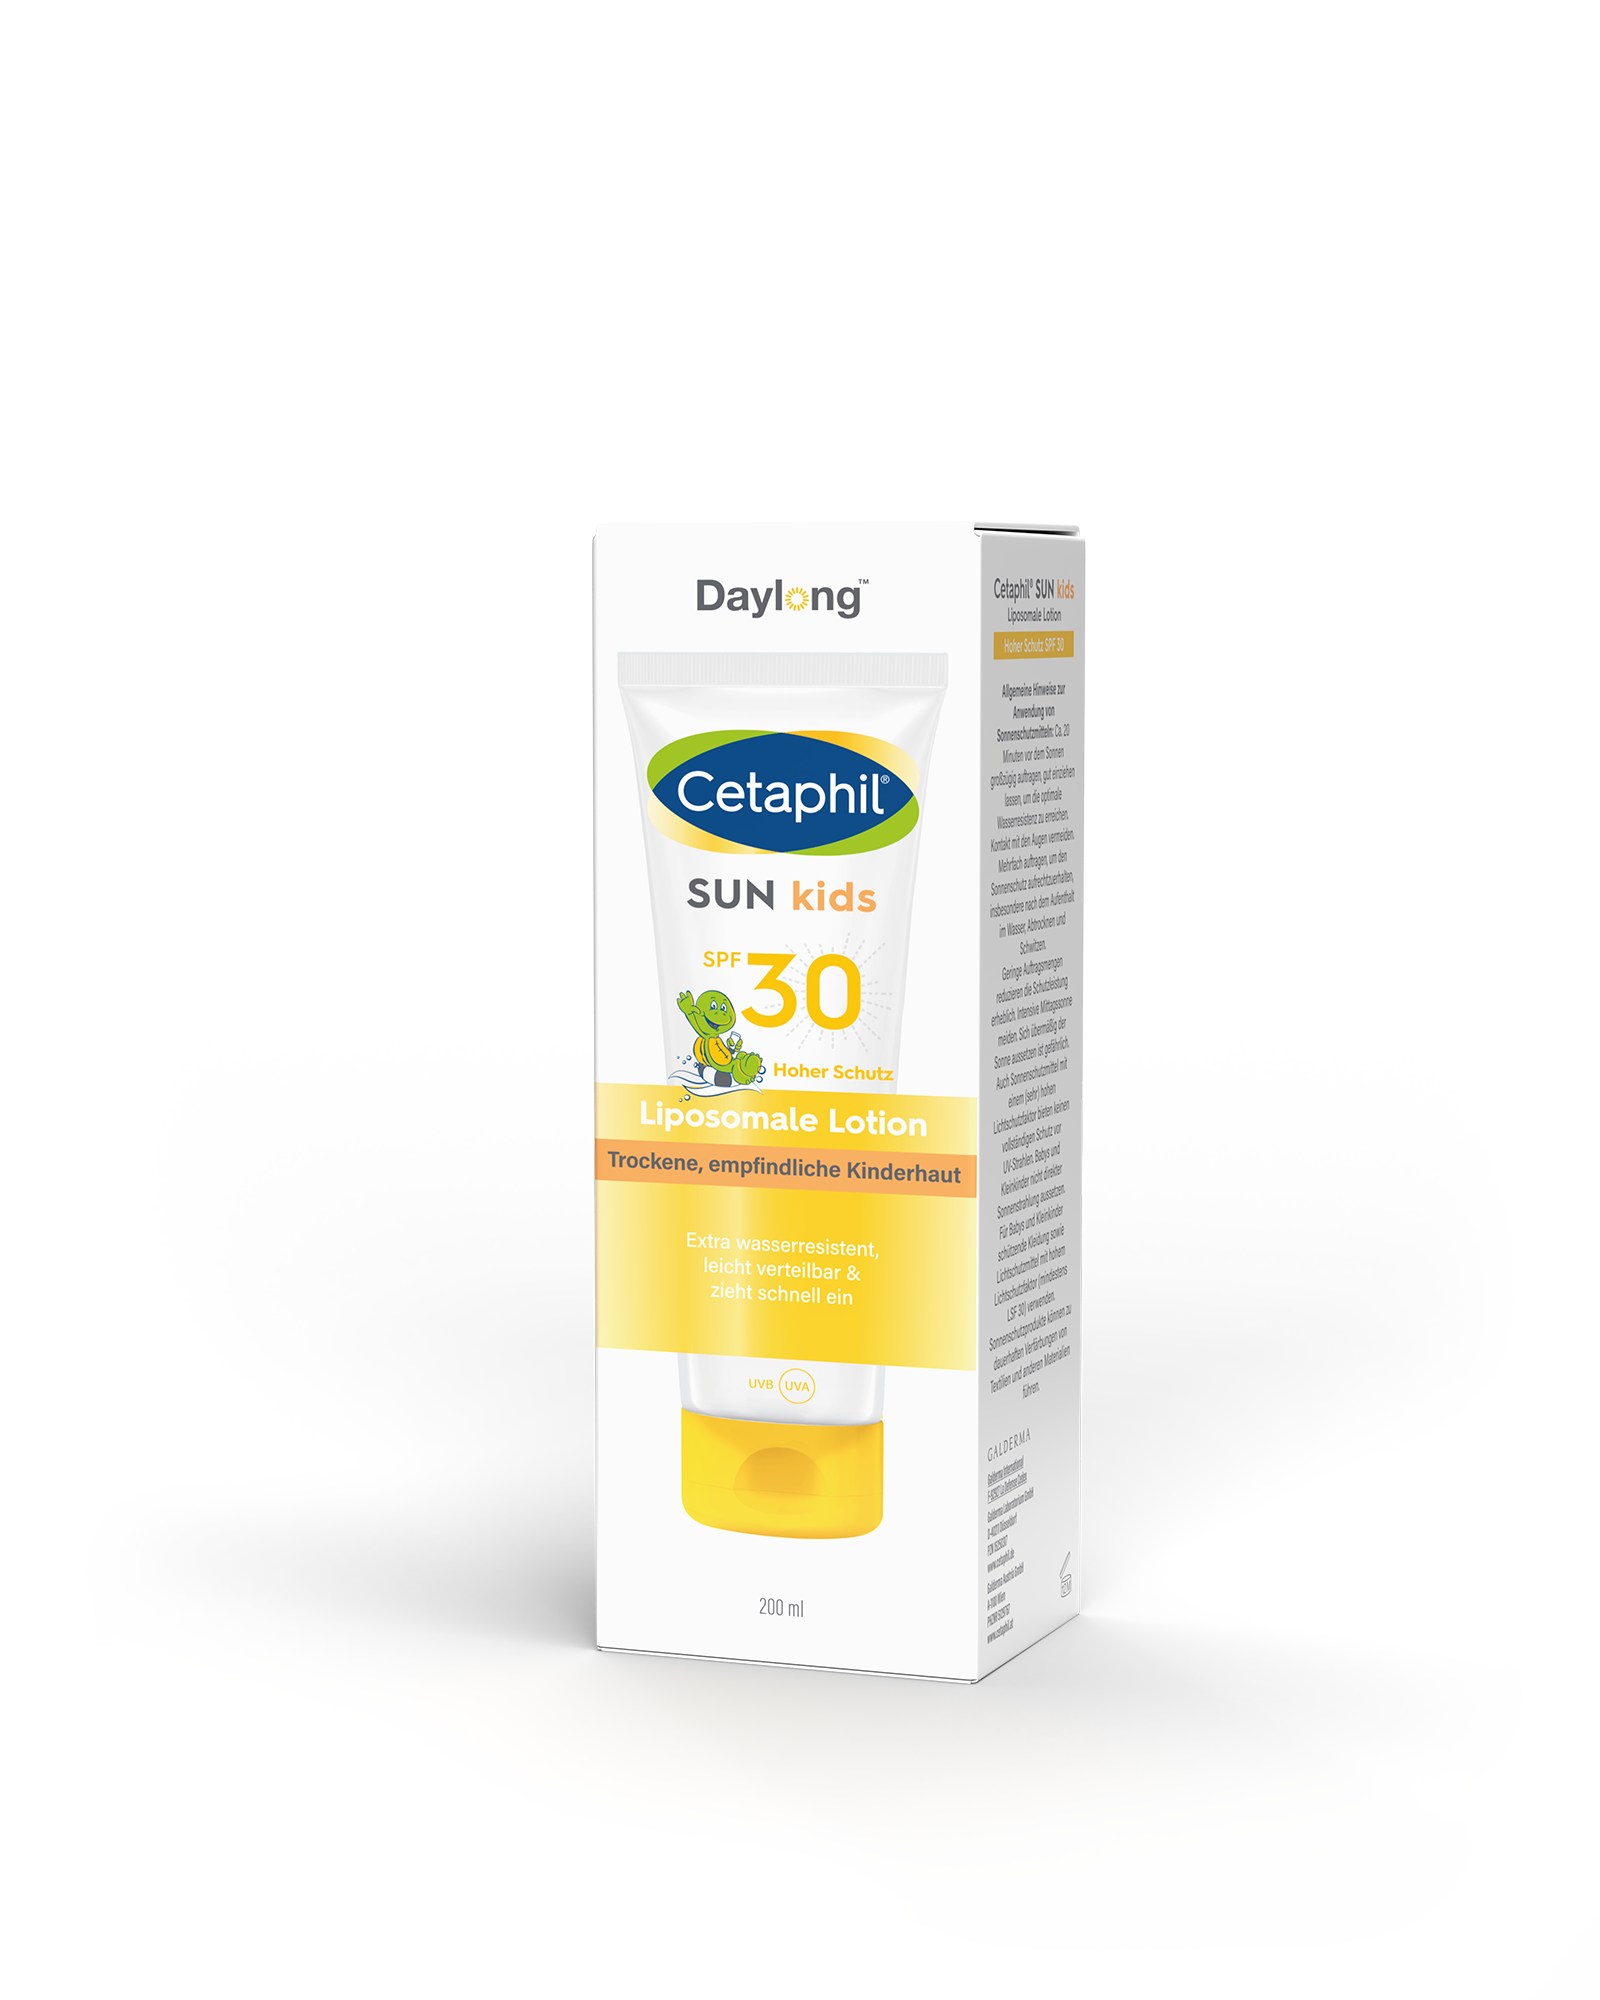 Cetaphil Sun Daylong Kids SPF 30 Liposomale Lotion (200 ml)